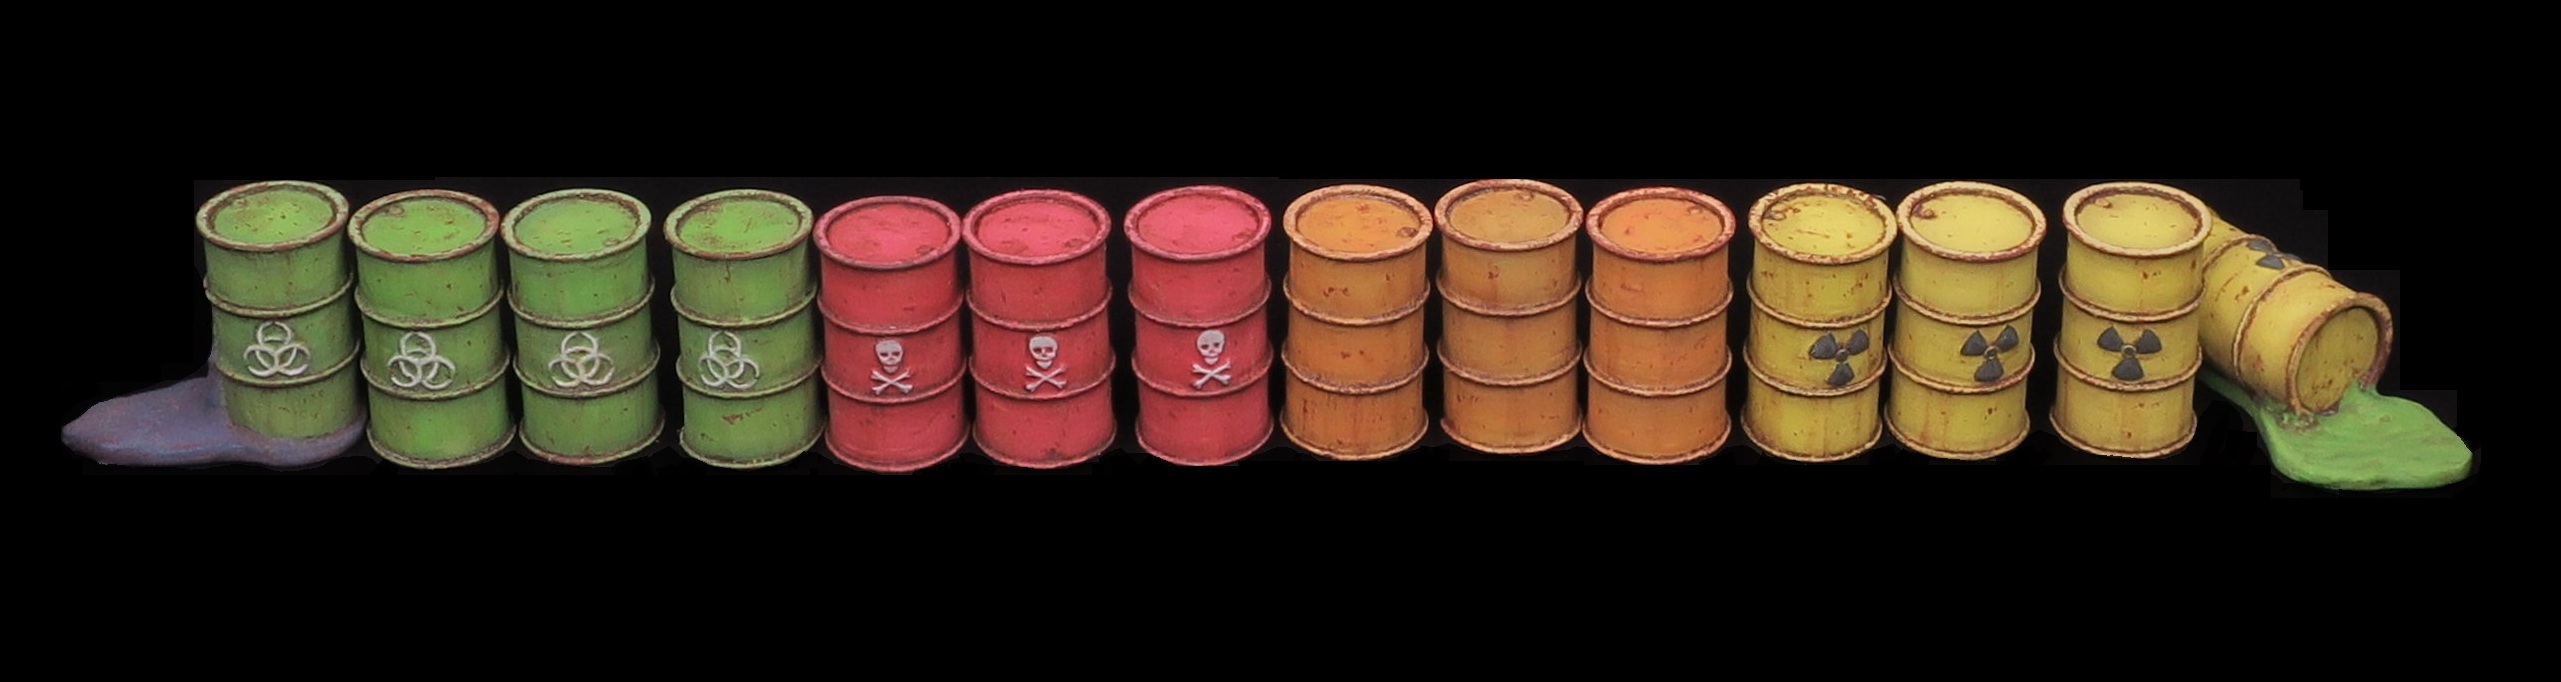 Atom Biohazard barrels